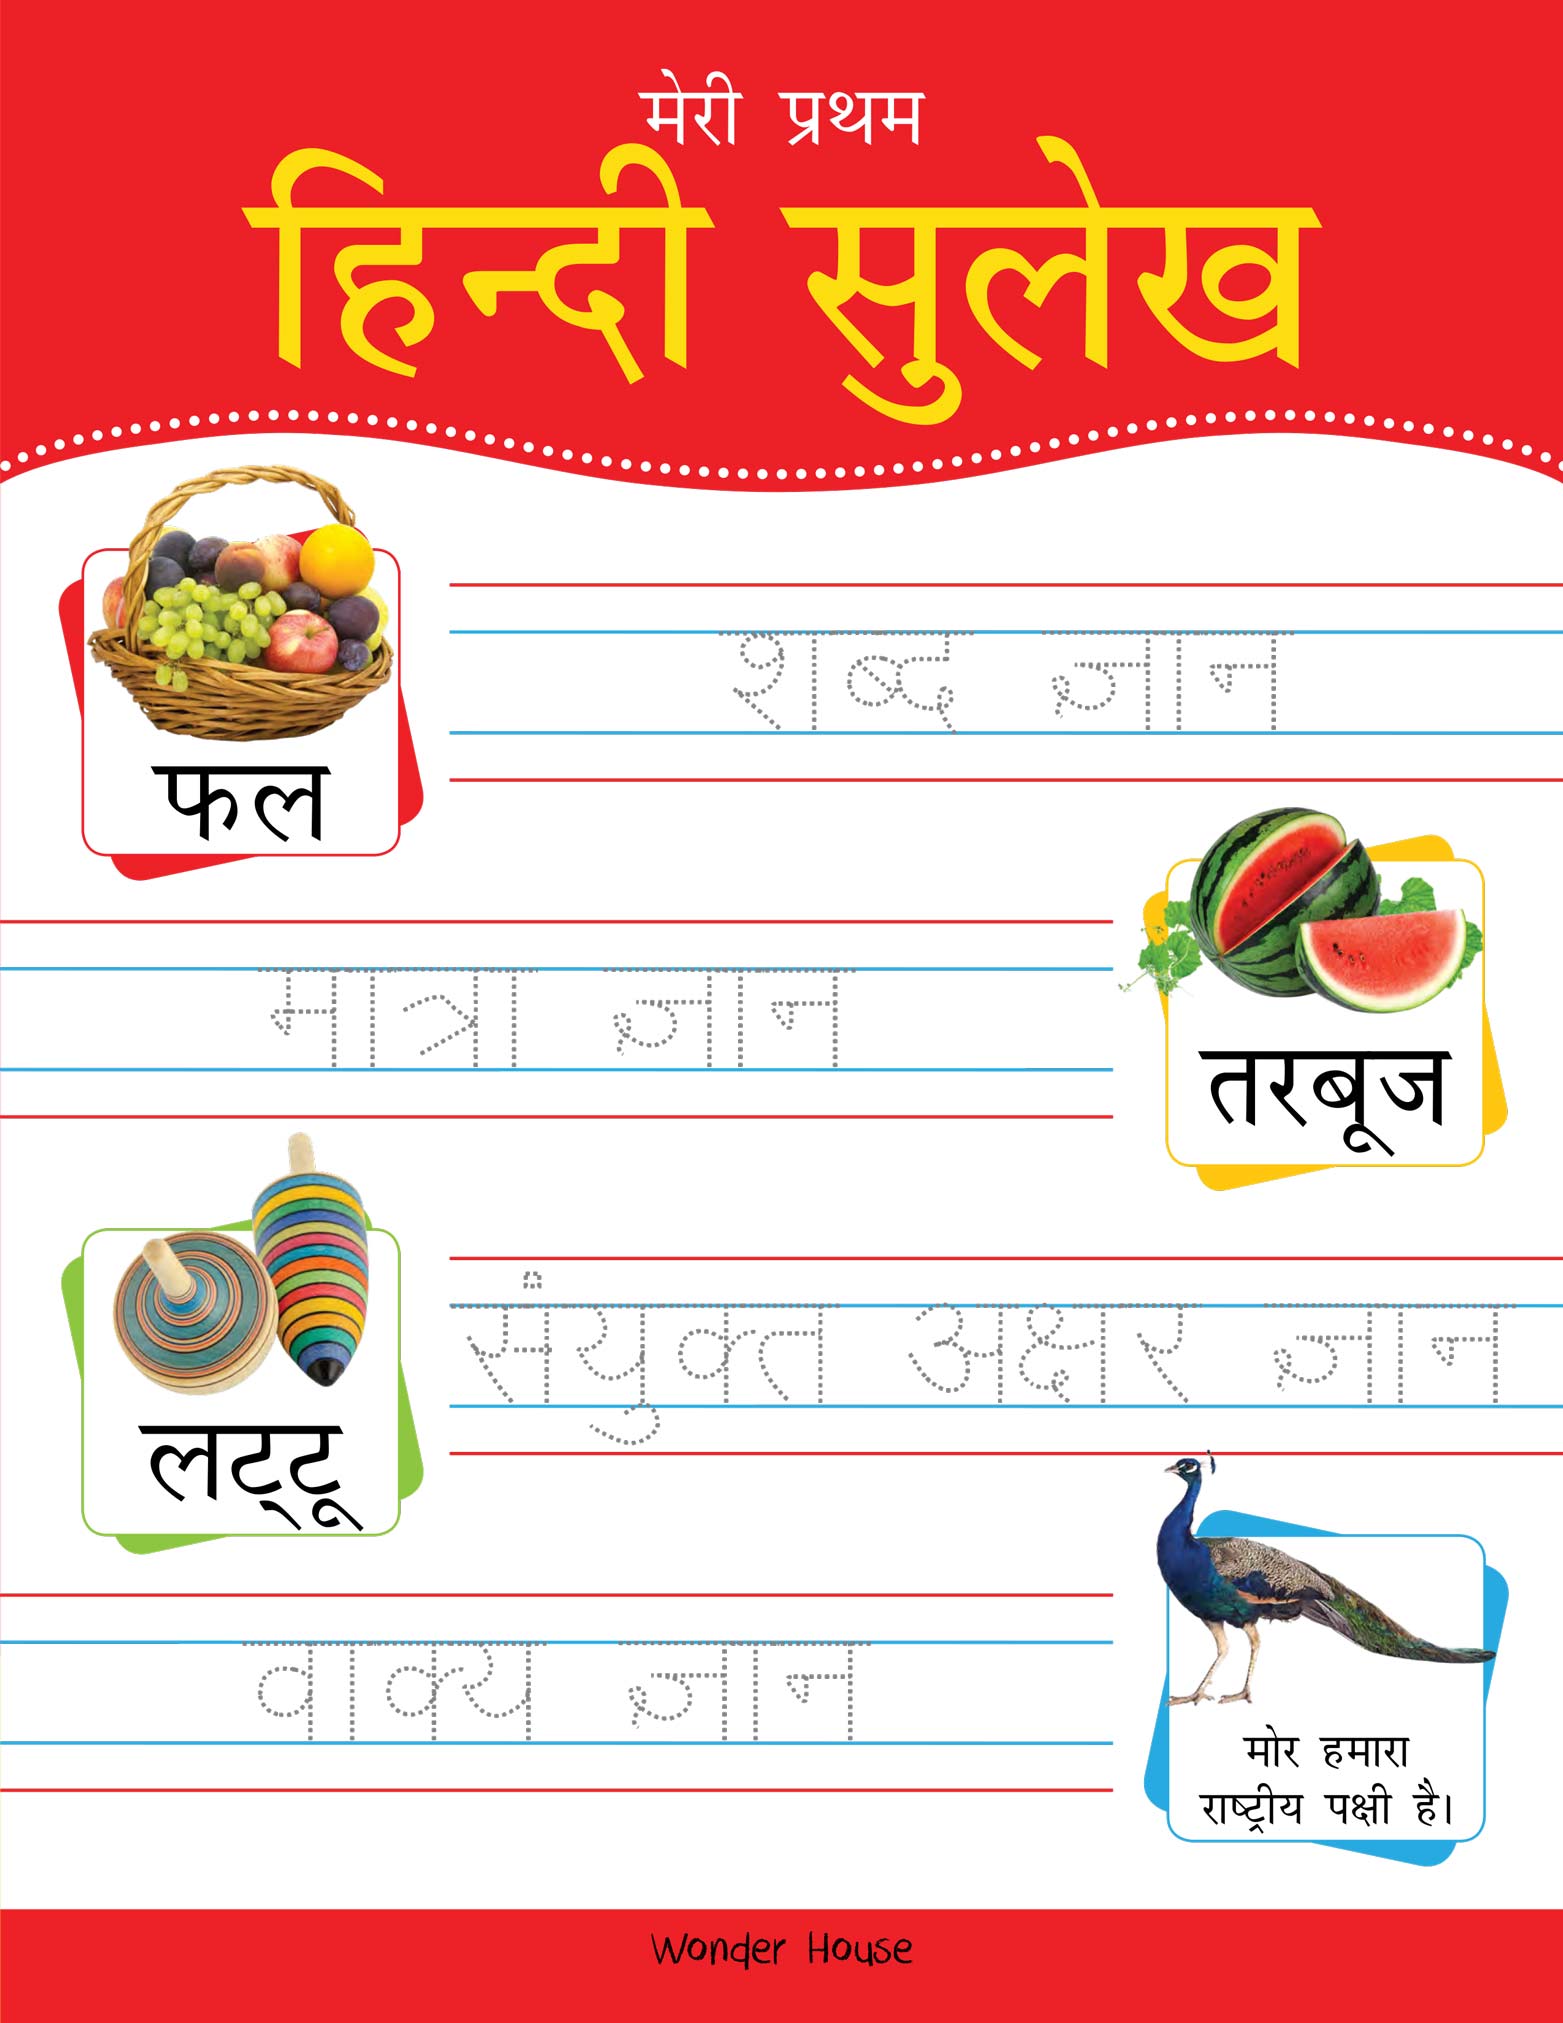 Meri Pratham Hindi Sulekh (Sangrah): Hindi Workbook To Practice Words And Sentences (Shabd Gyan, Maatra Gyan, Sayukt Akshar Gyan, Vaakya Gyan)